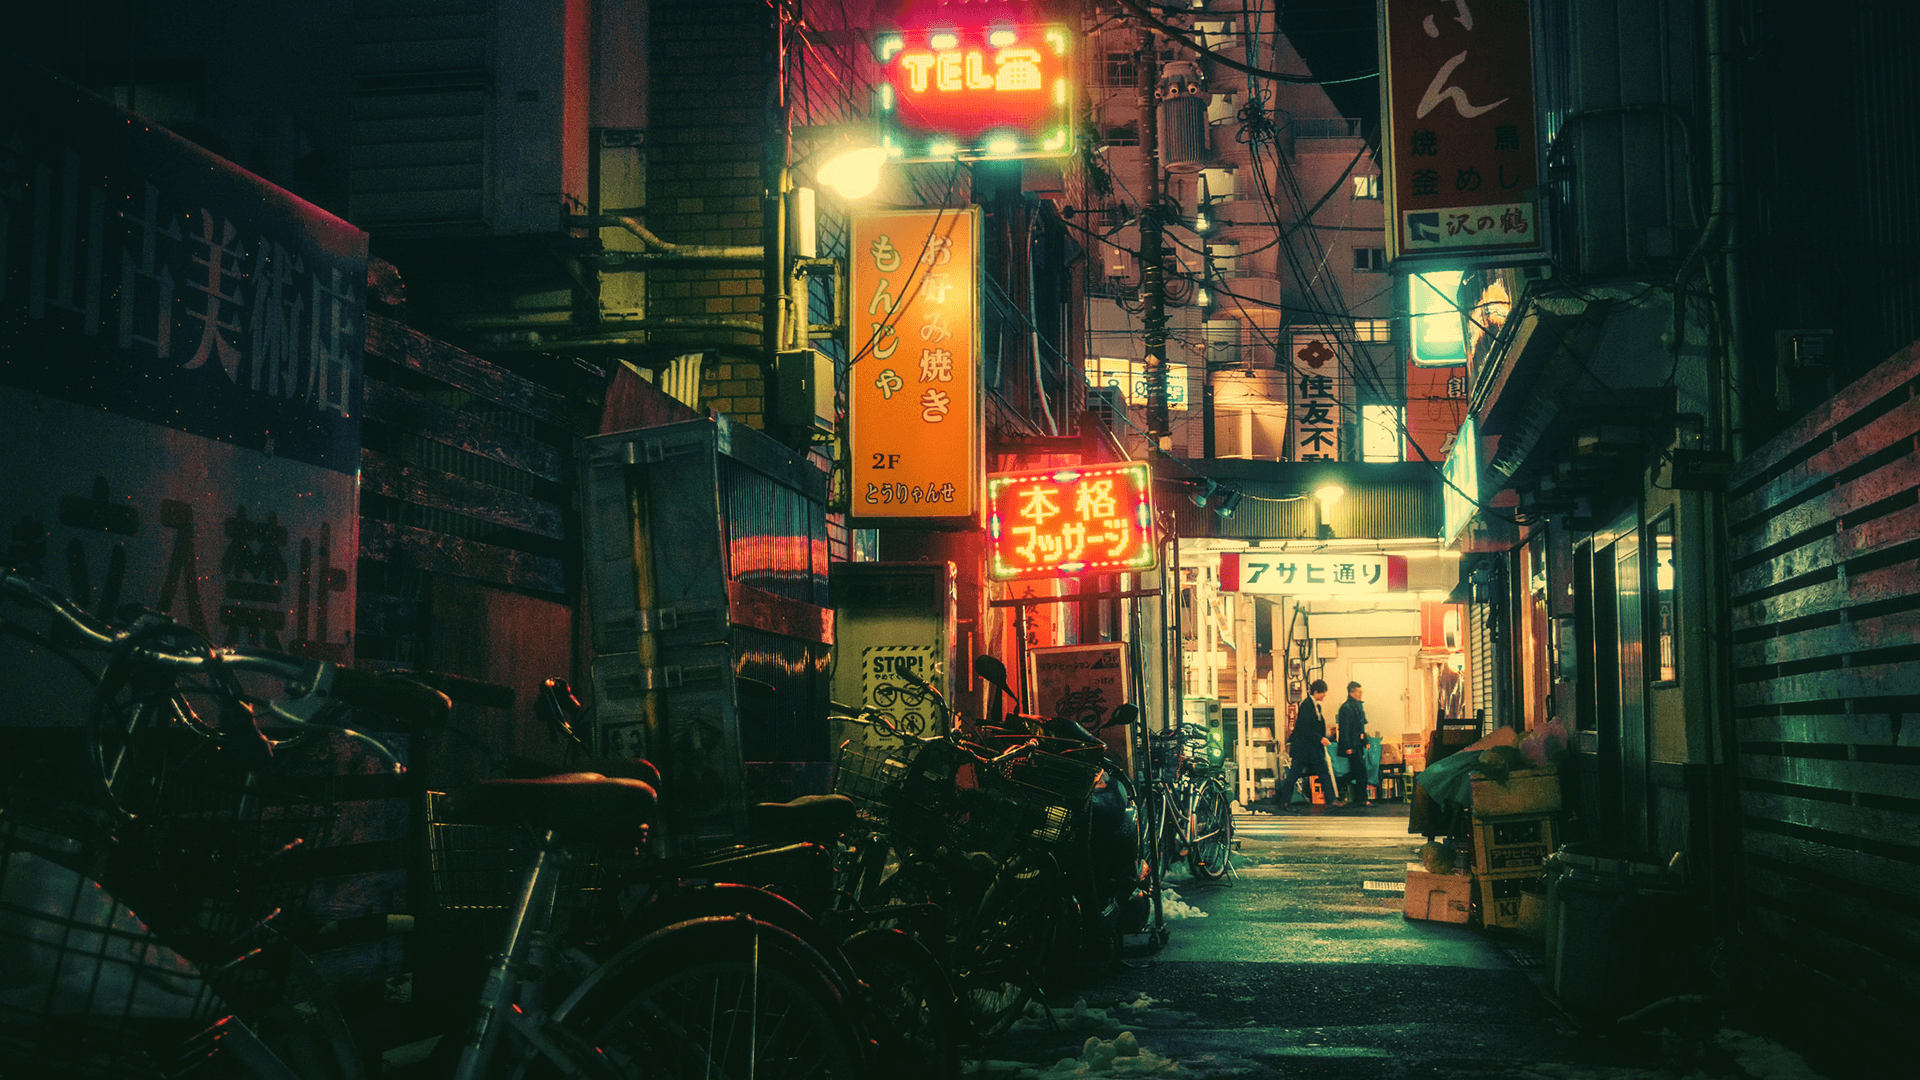 General 1920x1080 Tokyo night photography bicycle backstreet neon sign Japan low light sign kanji people Japanese building